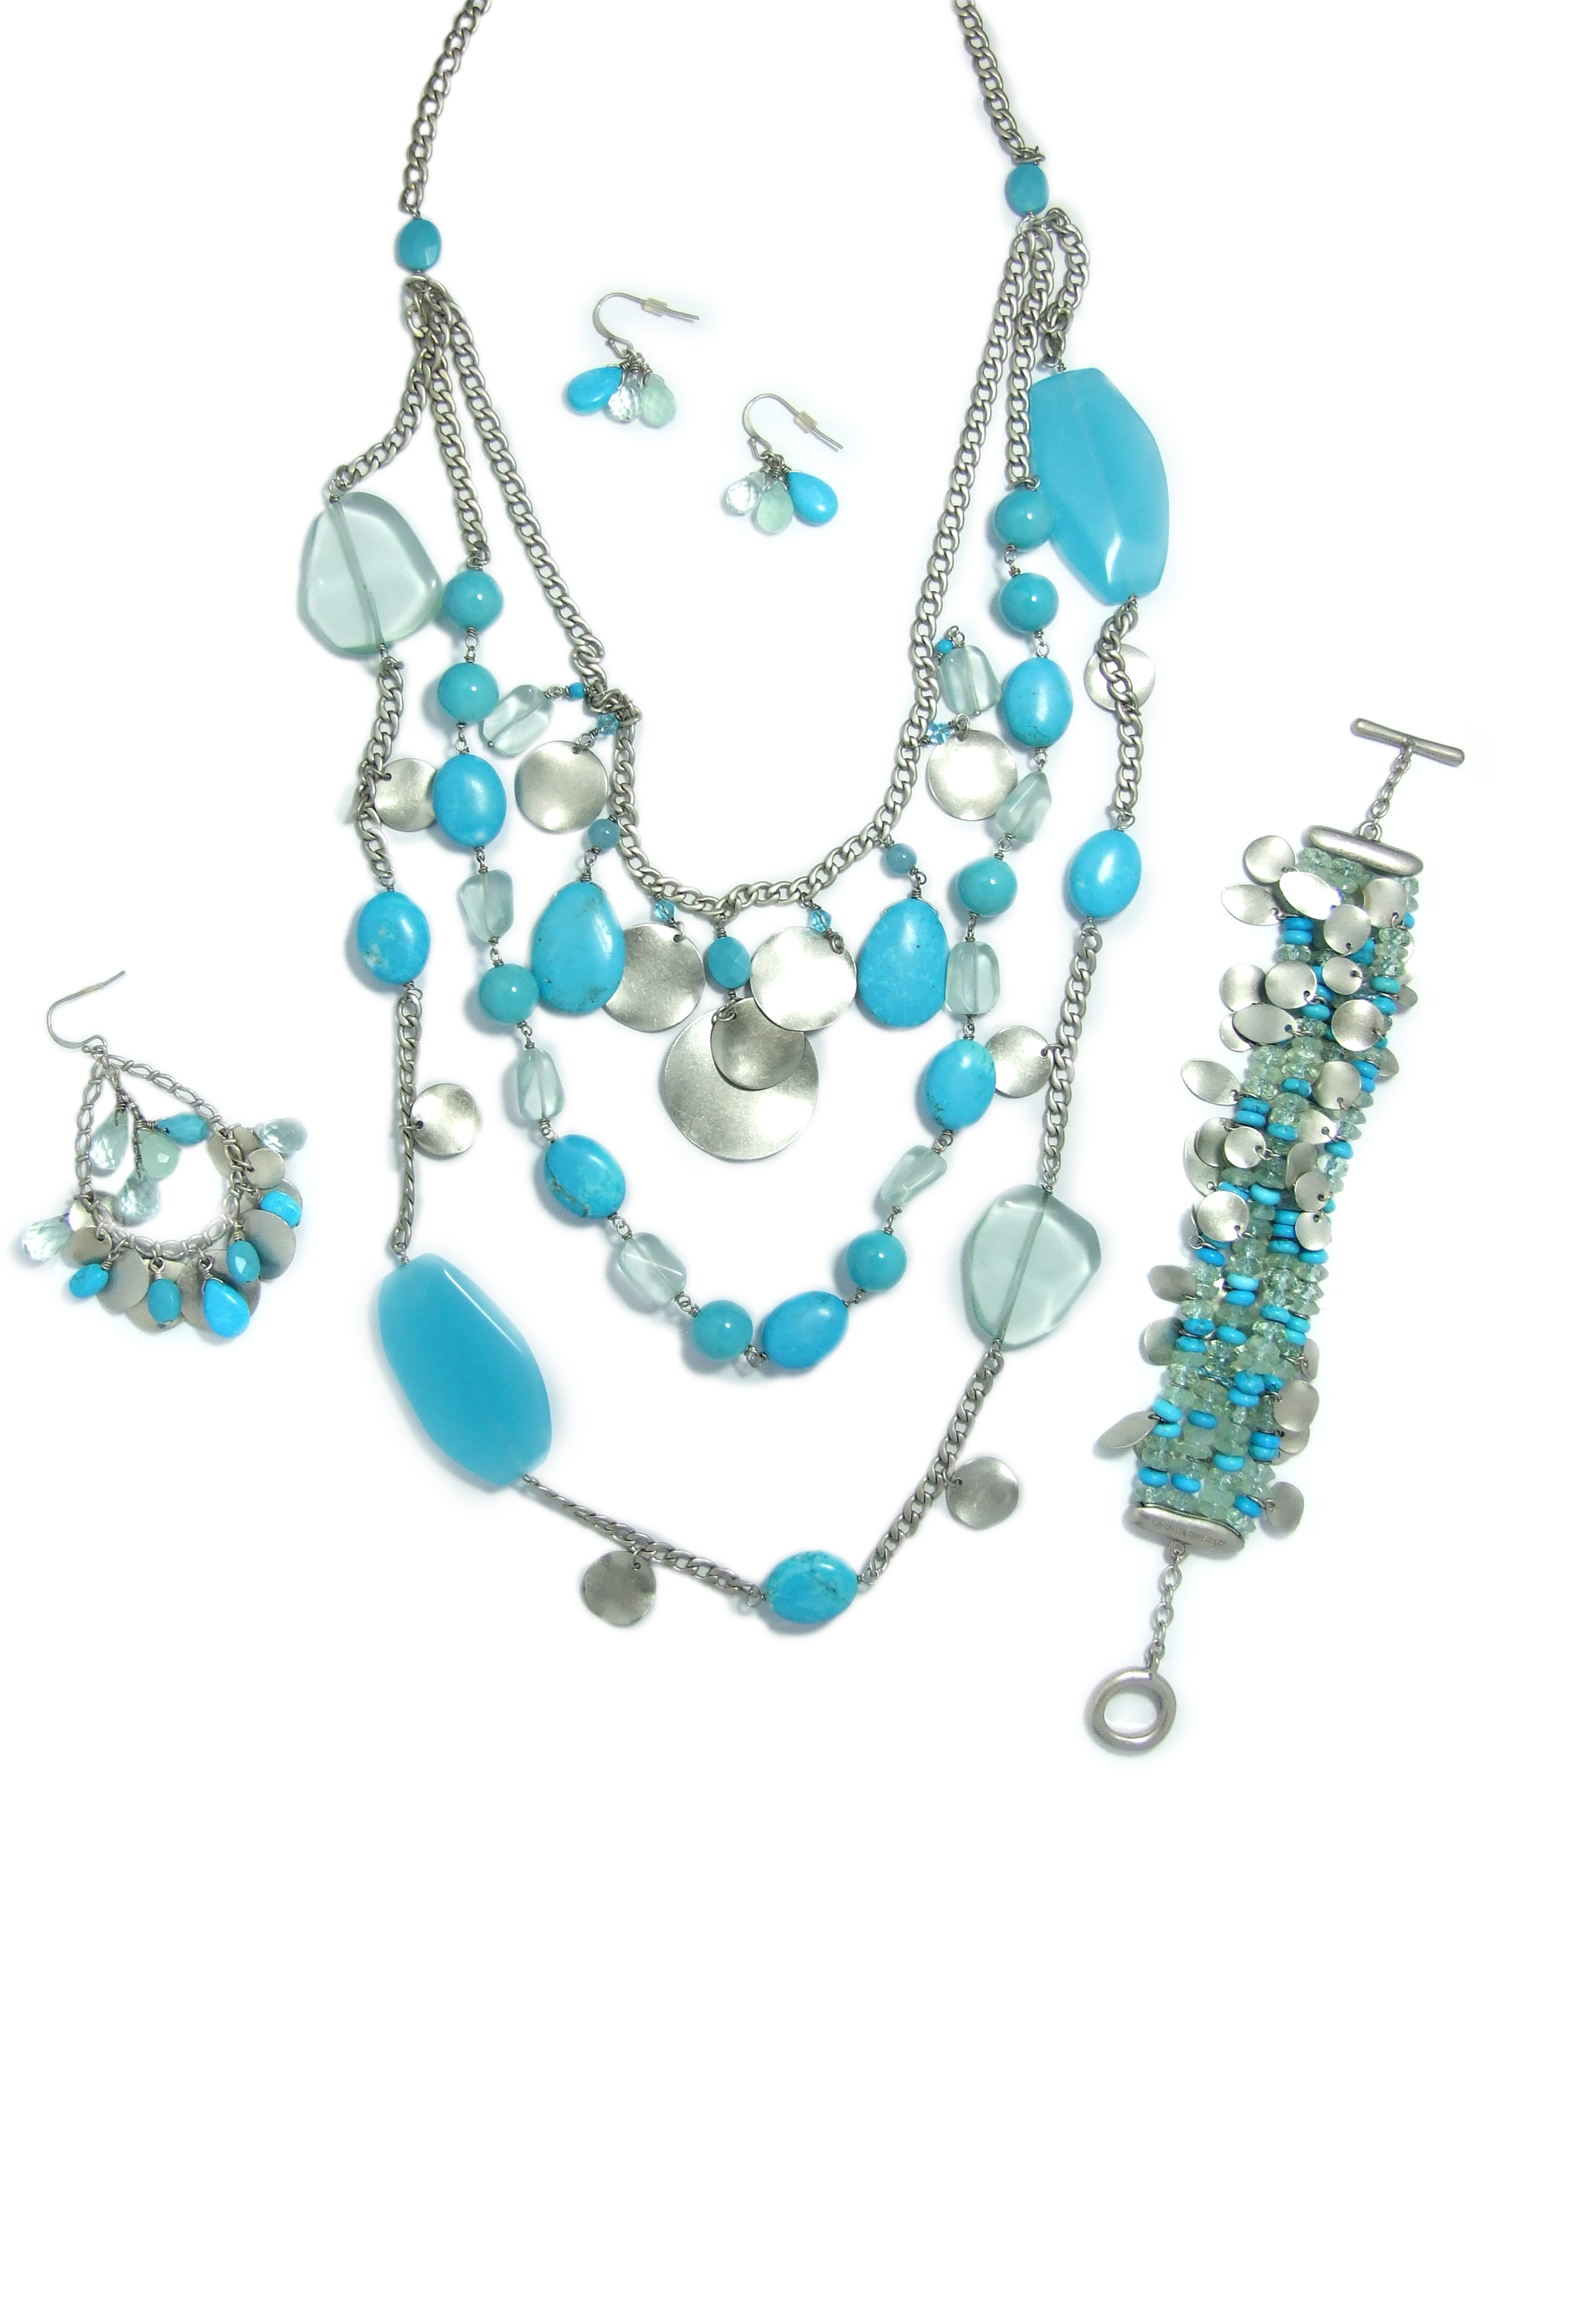 u003Ci>Ocean blue glass with metal coin necklace.u003C/i> u003Cb>메탈 코인 네크리스가 있는 오션 블루 글라스.u003C/b> u003Ci>bracelet &amp; earringsu003C/i> u003Cb>팔찌 &amp; 귀걸이u003C/b>